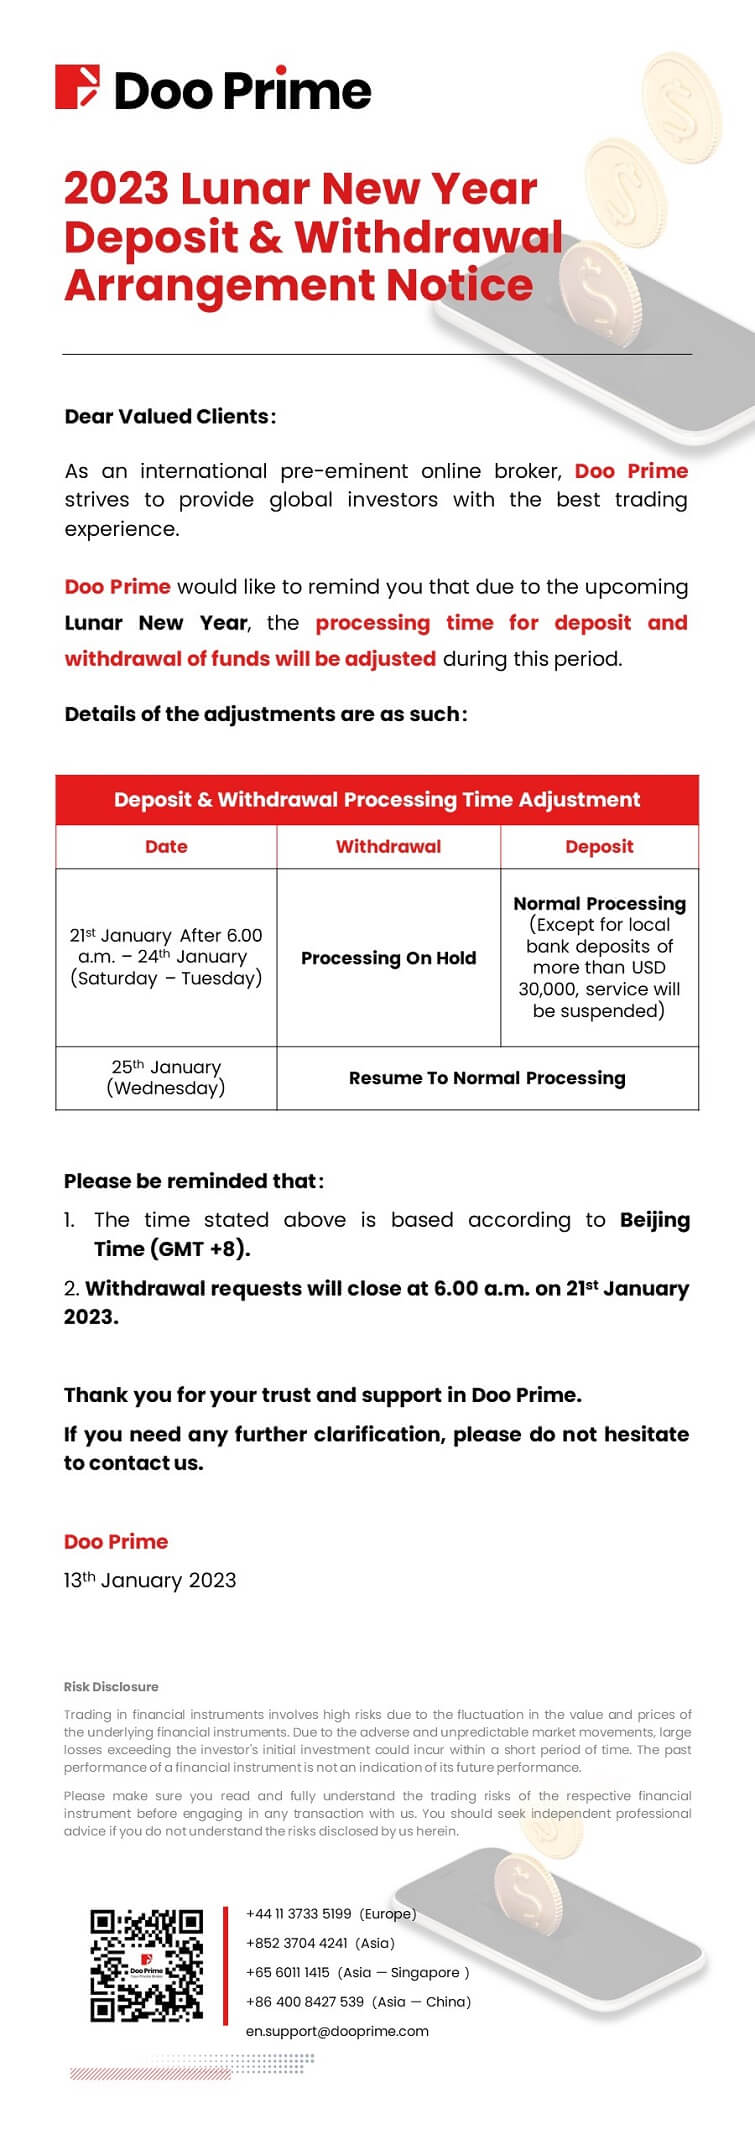 Doo Prime 2023 Lunar New Year Deposit & Withdrawal Arrangement Notice